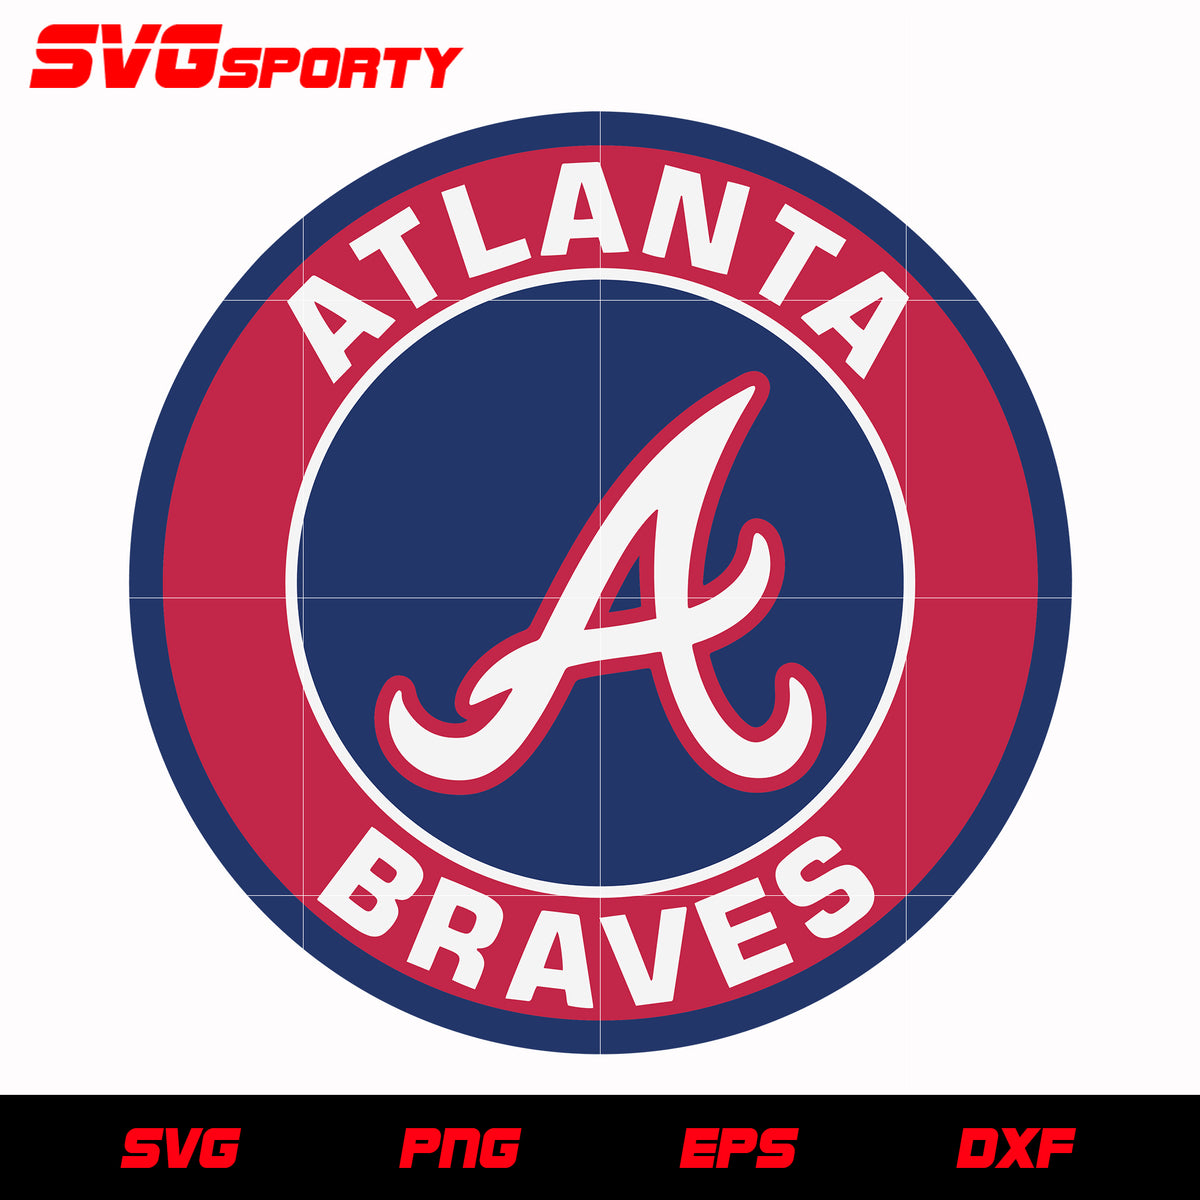 Atlanta Braves Logo Outline Decal Stickers